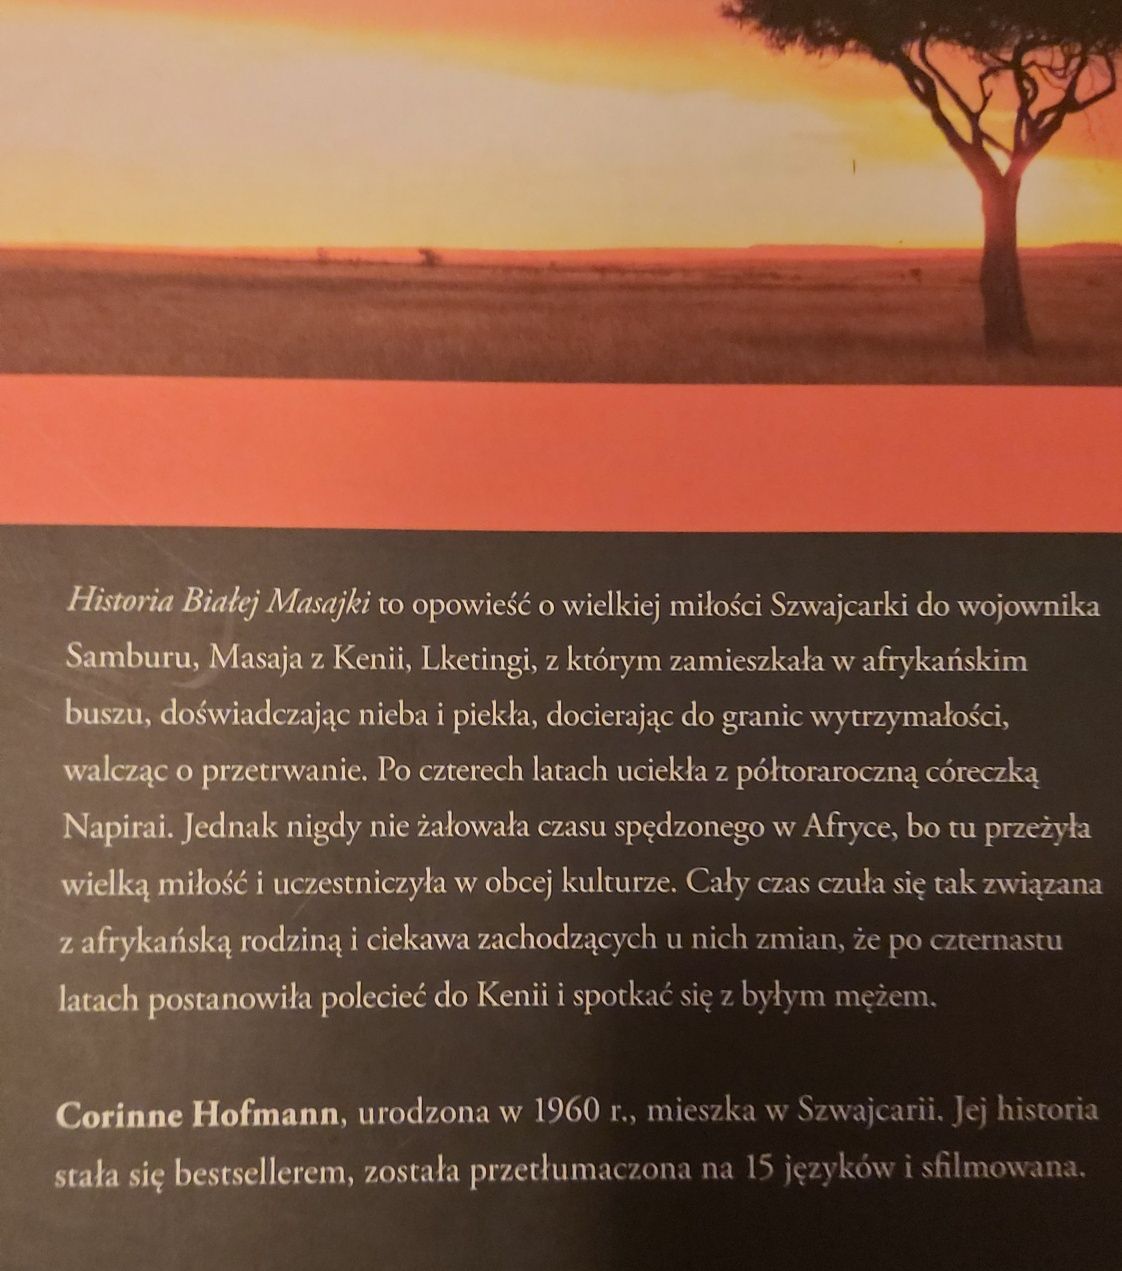 "Historia Białej Masajki" Corinne Hofmann